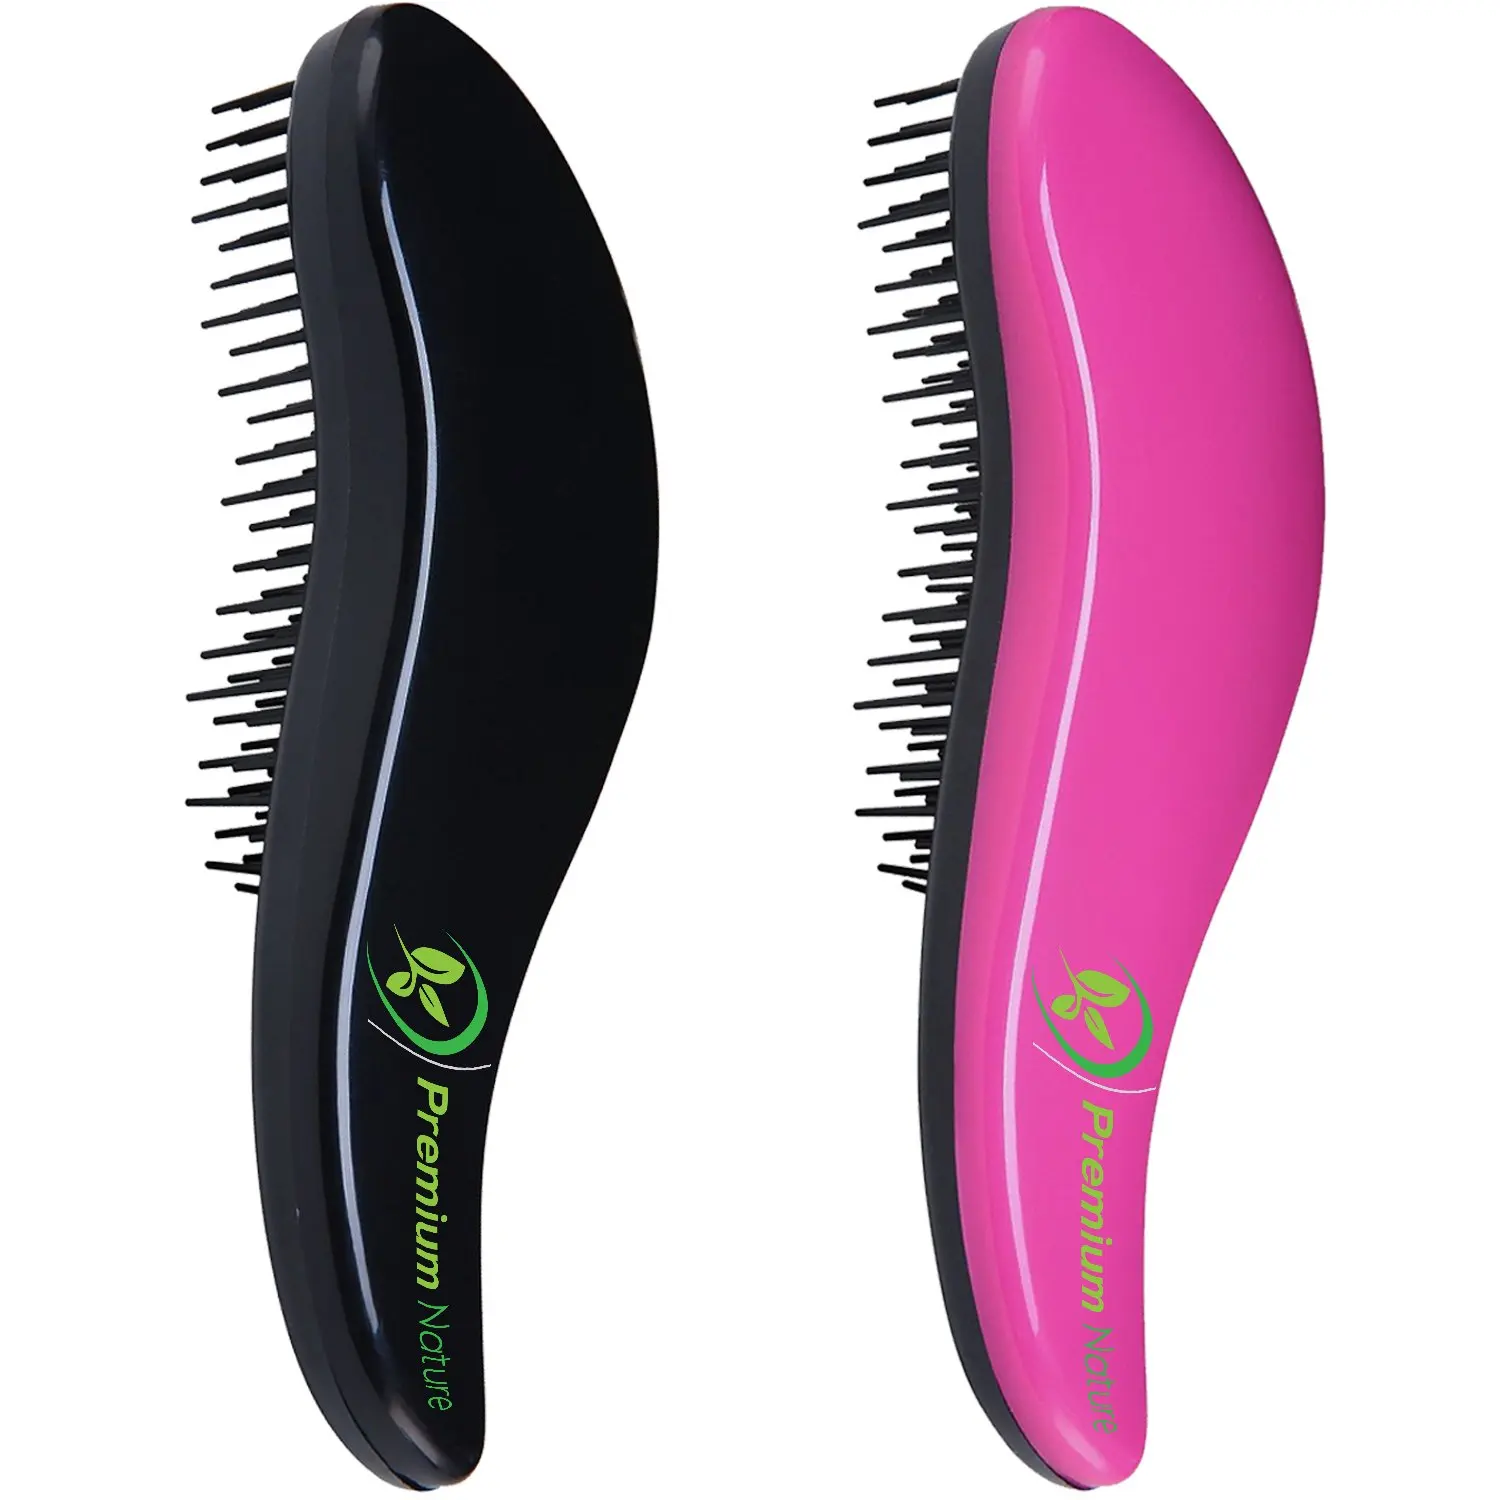 Cheap Wavy Hair Brush Find Wavy Hair Brush Deals On Line At